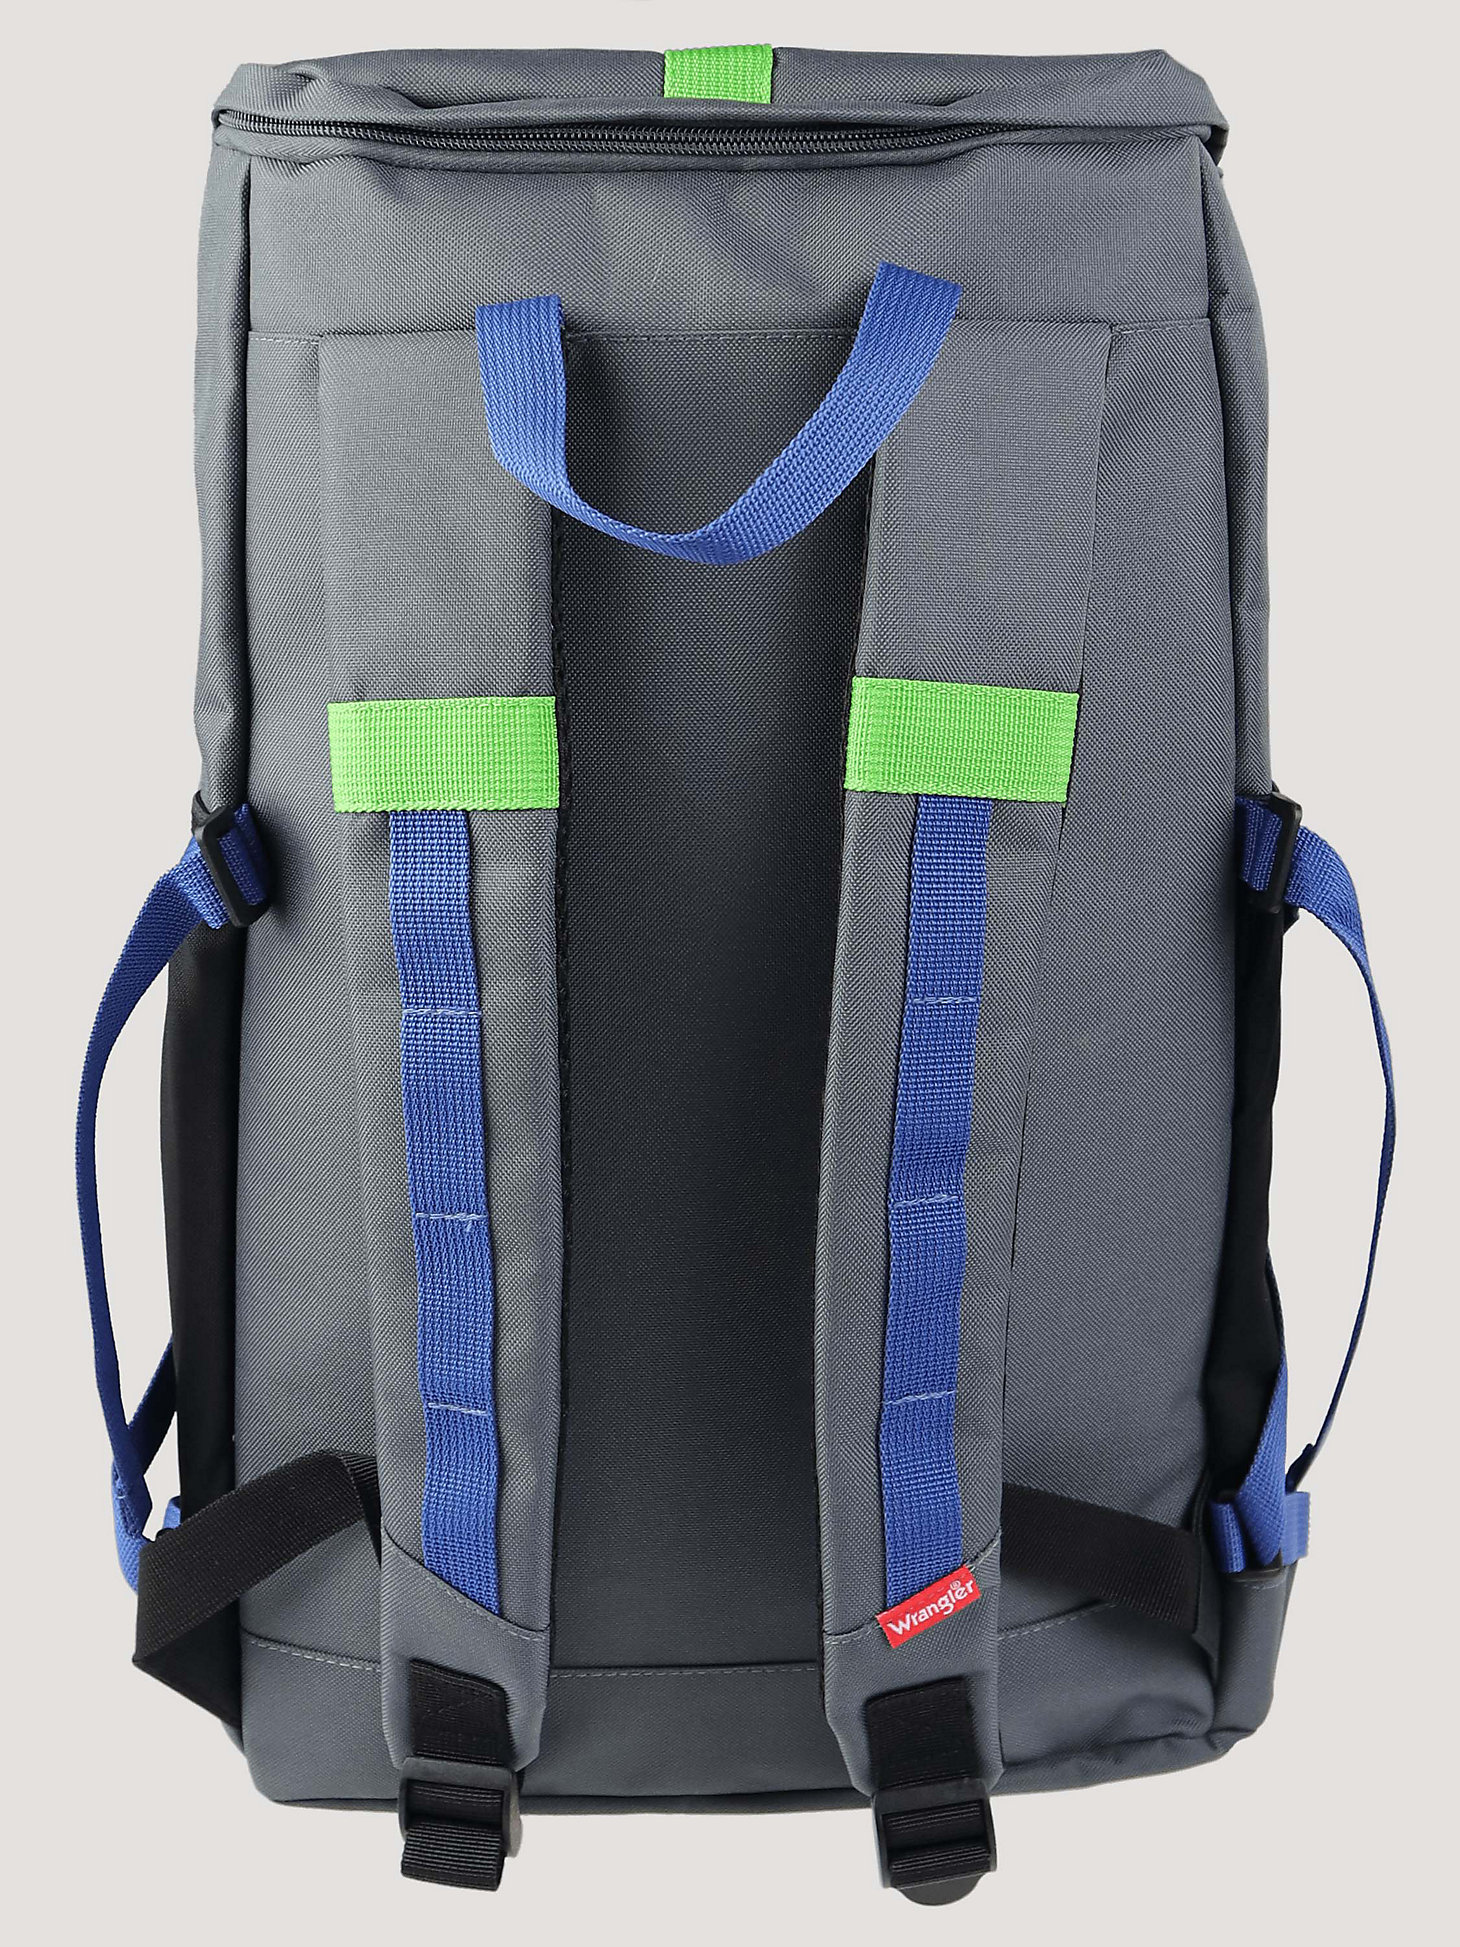 ATG By Wrangler™ Summit Hike Backpack in Black alternative view 1